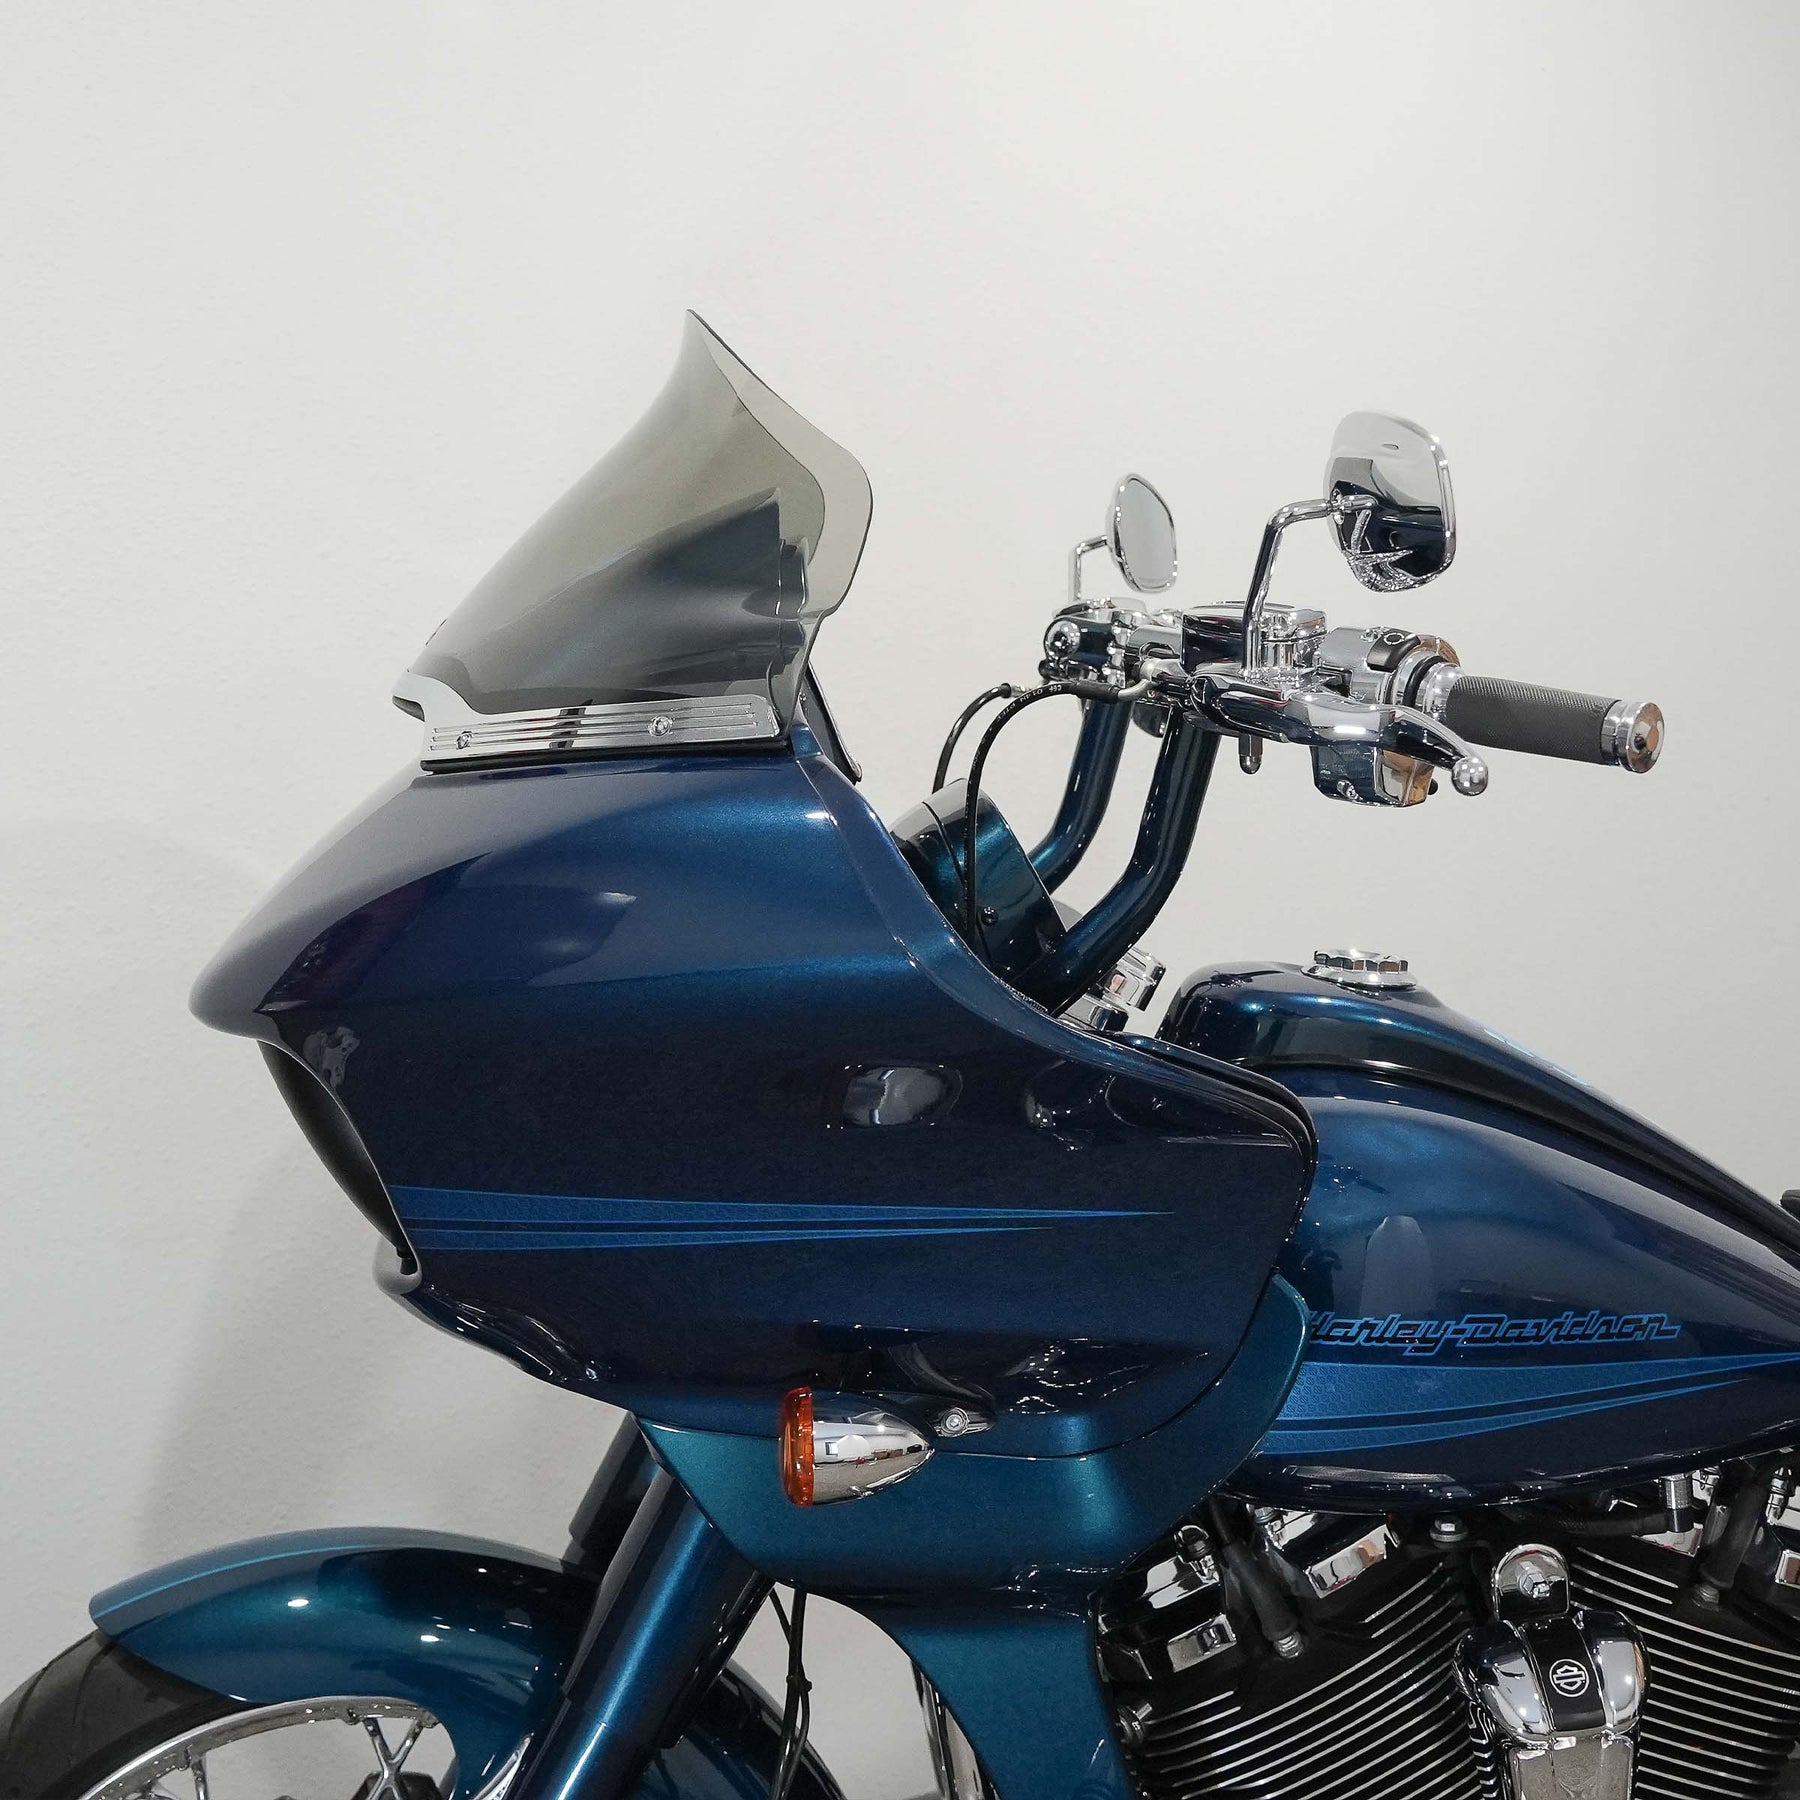 11" Sport Tint Flare™ Windshields for Harley-Davidson 2015-2023 Road Glide motorcycle models